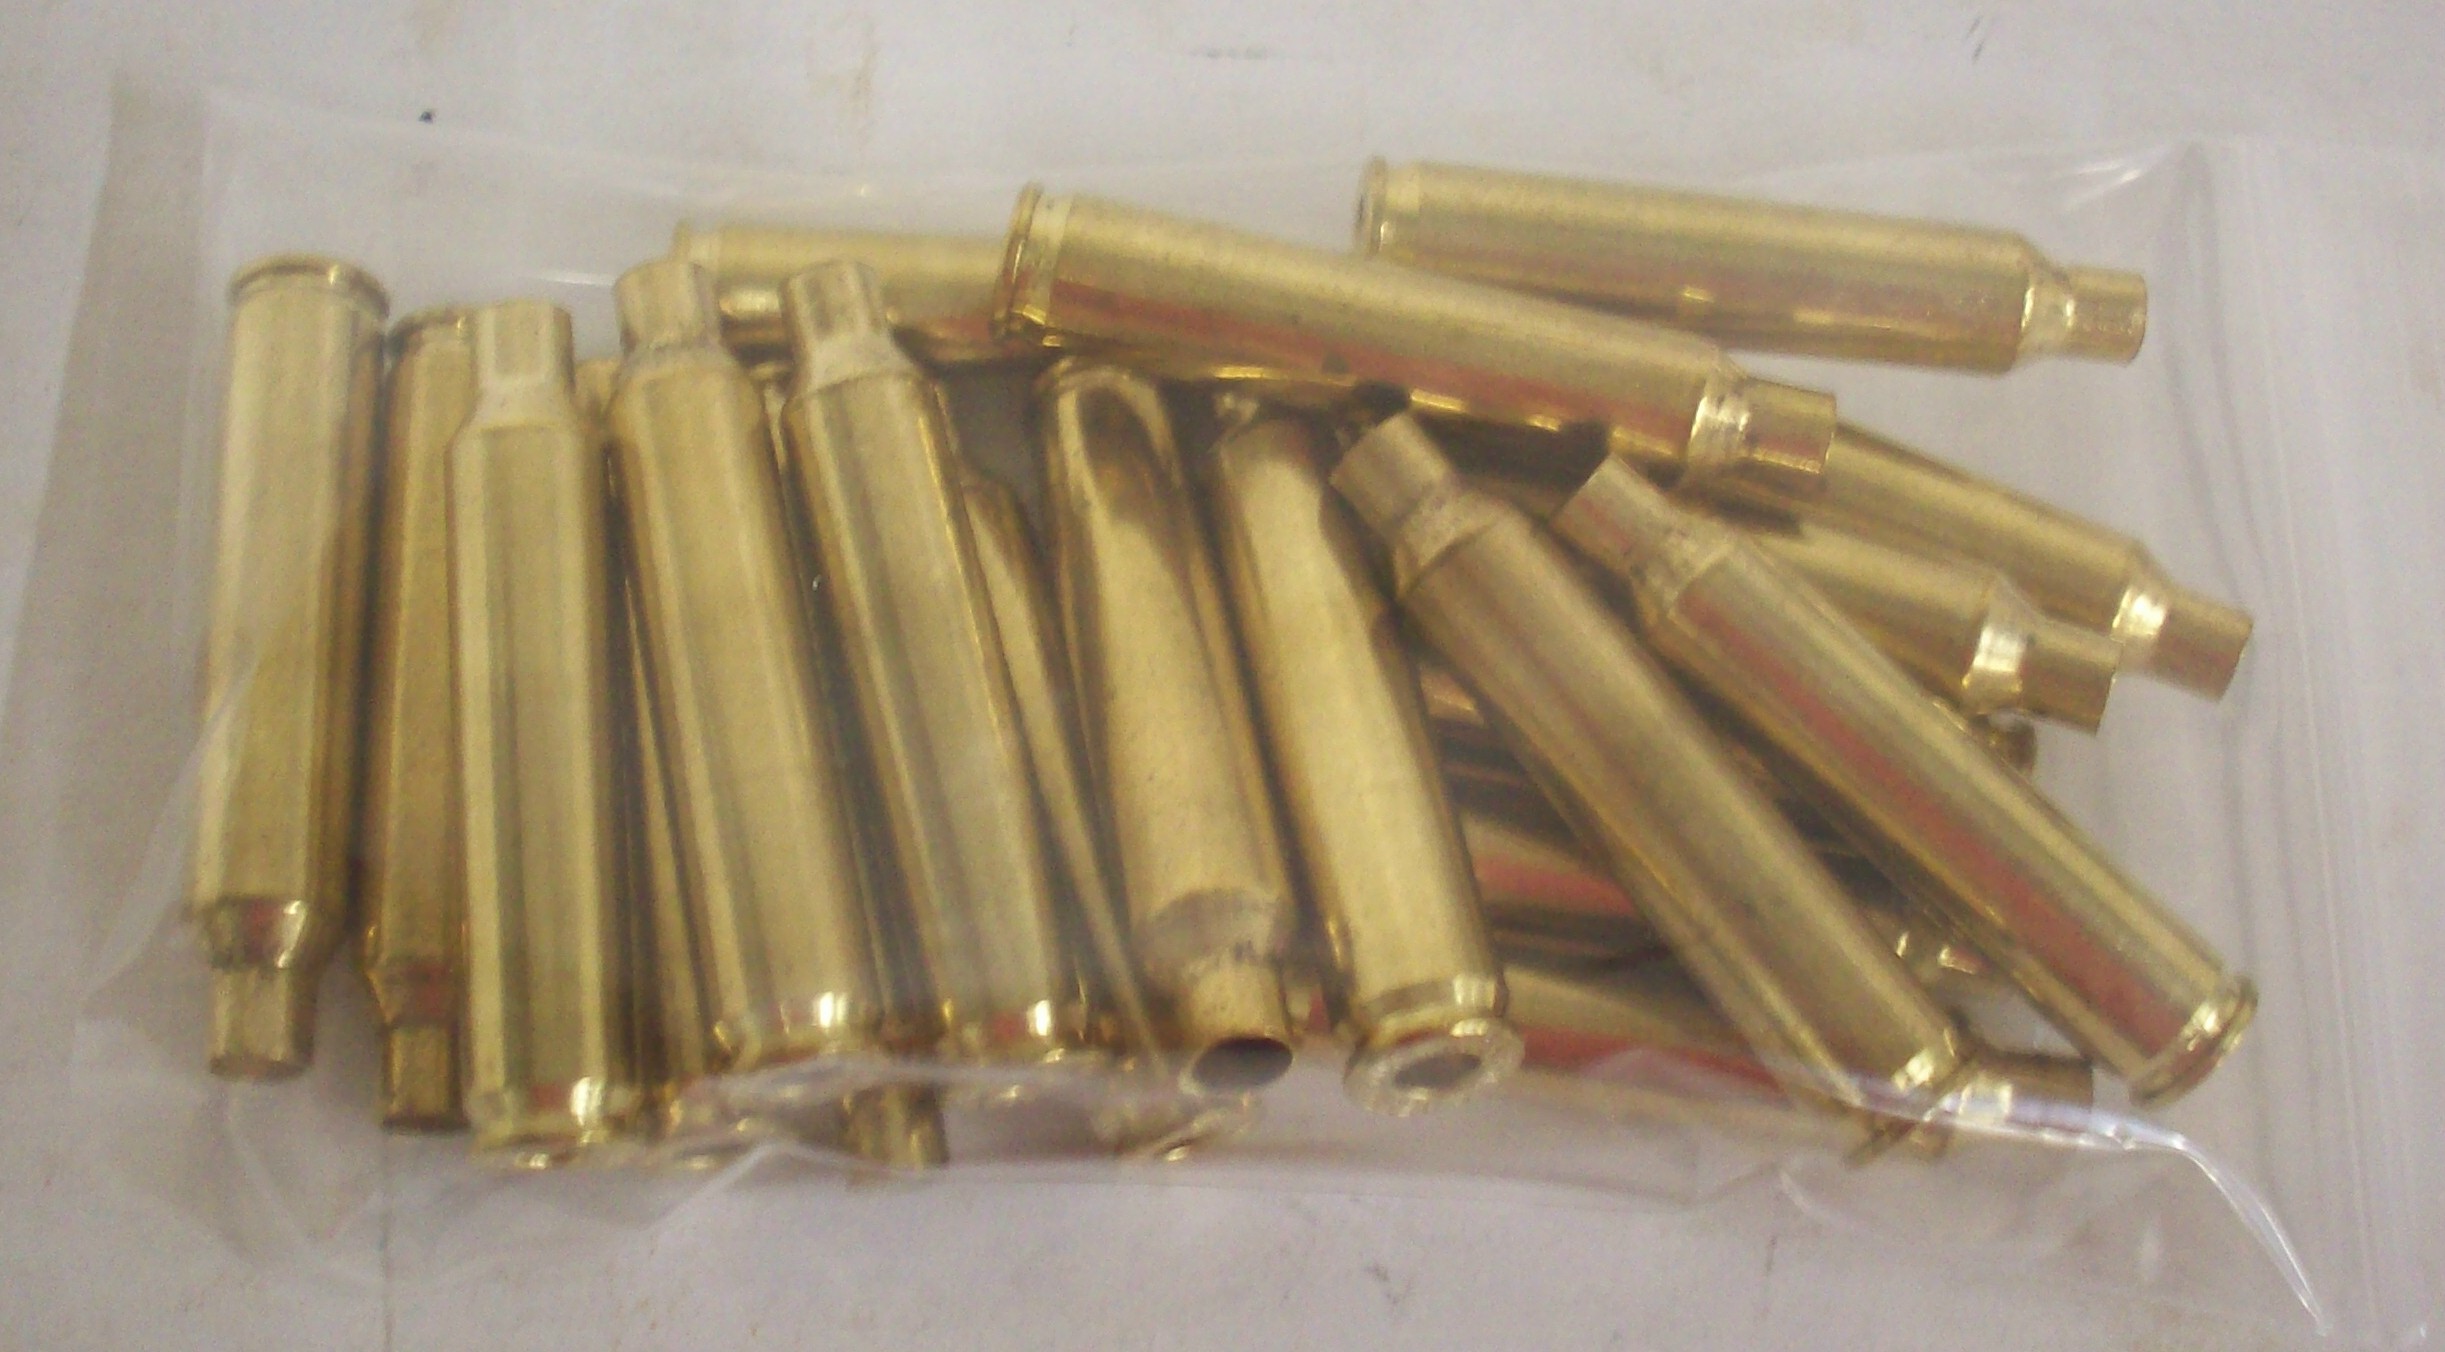 Brass Cartridge Case, .416 Barrett, Ruag, Unprimed, Box of 25